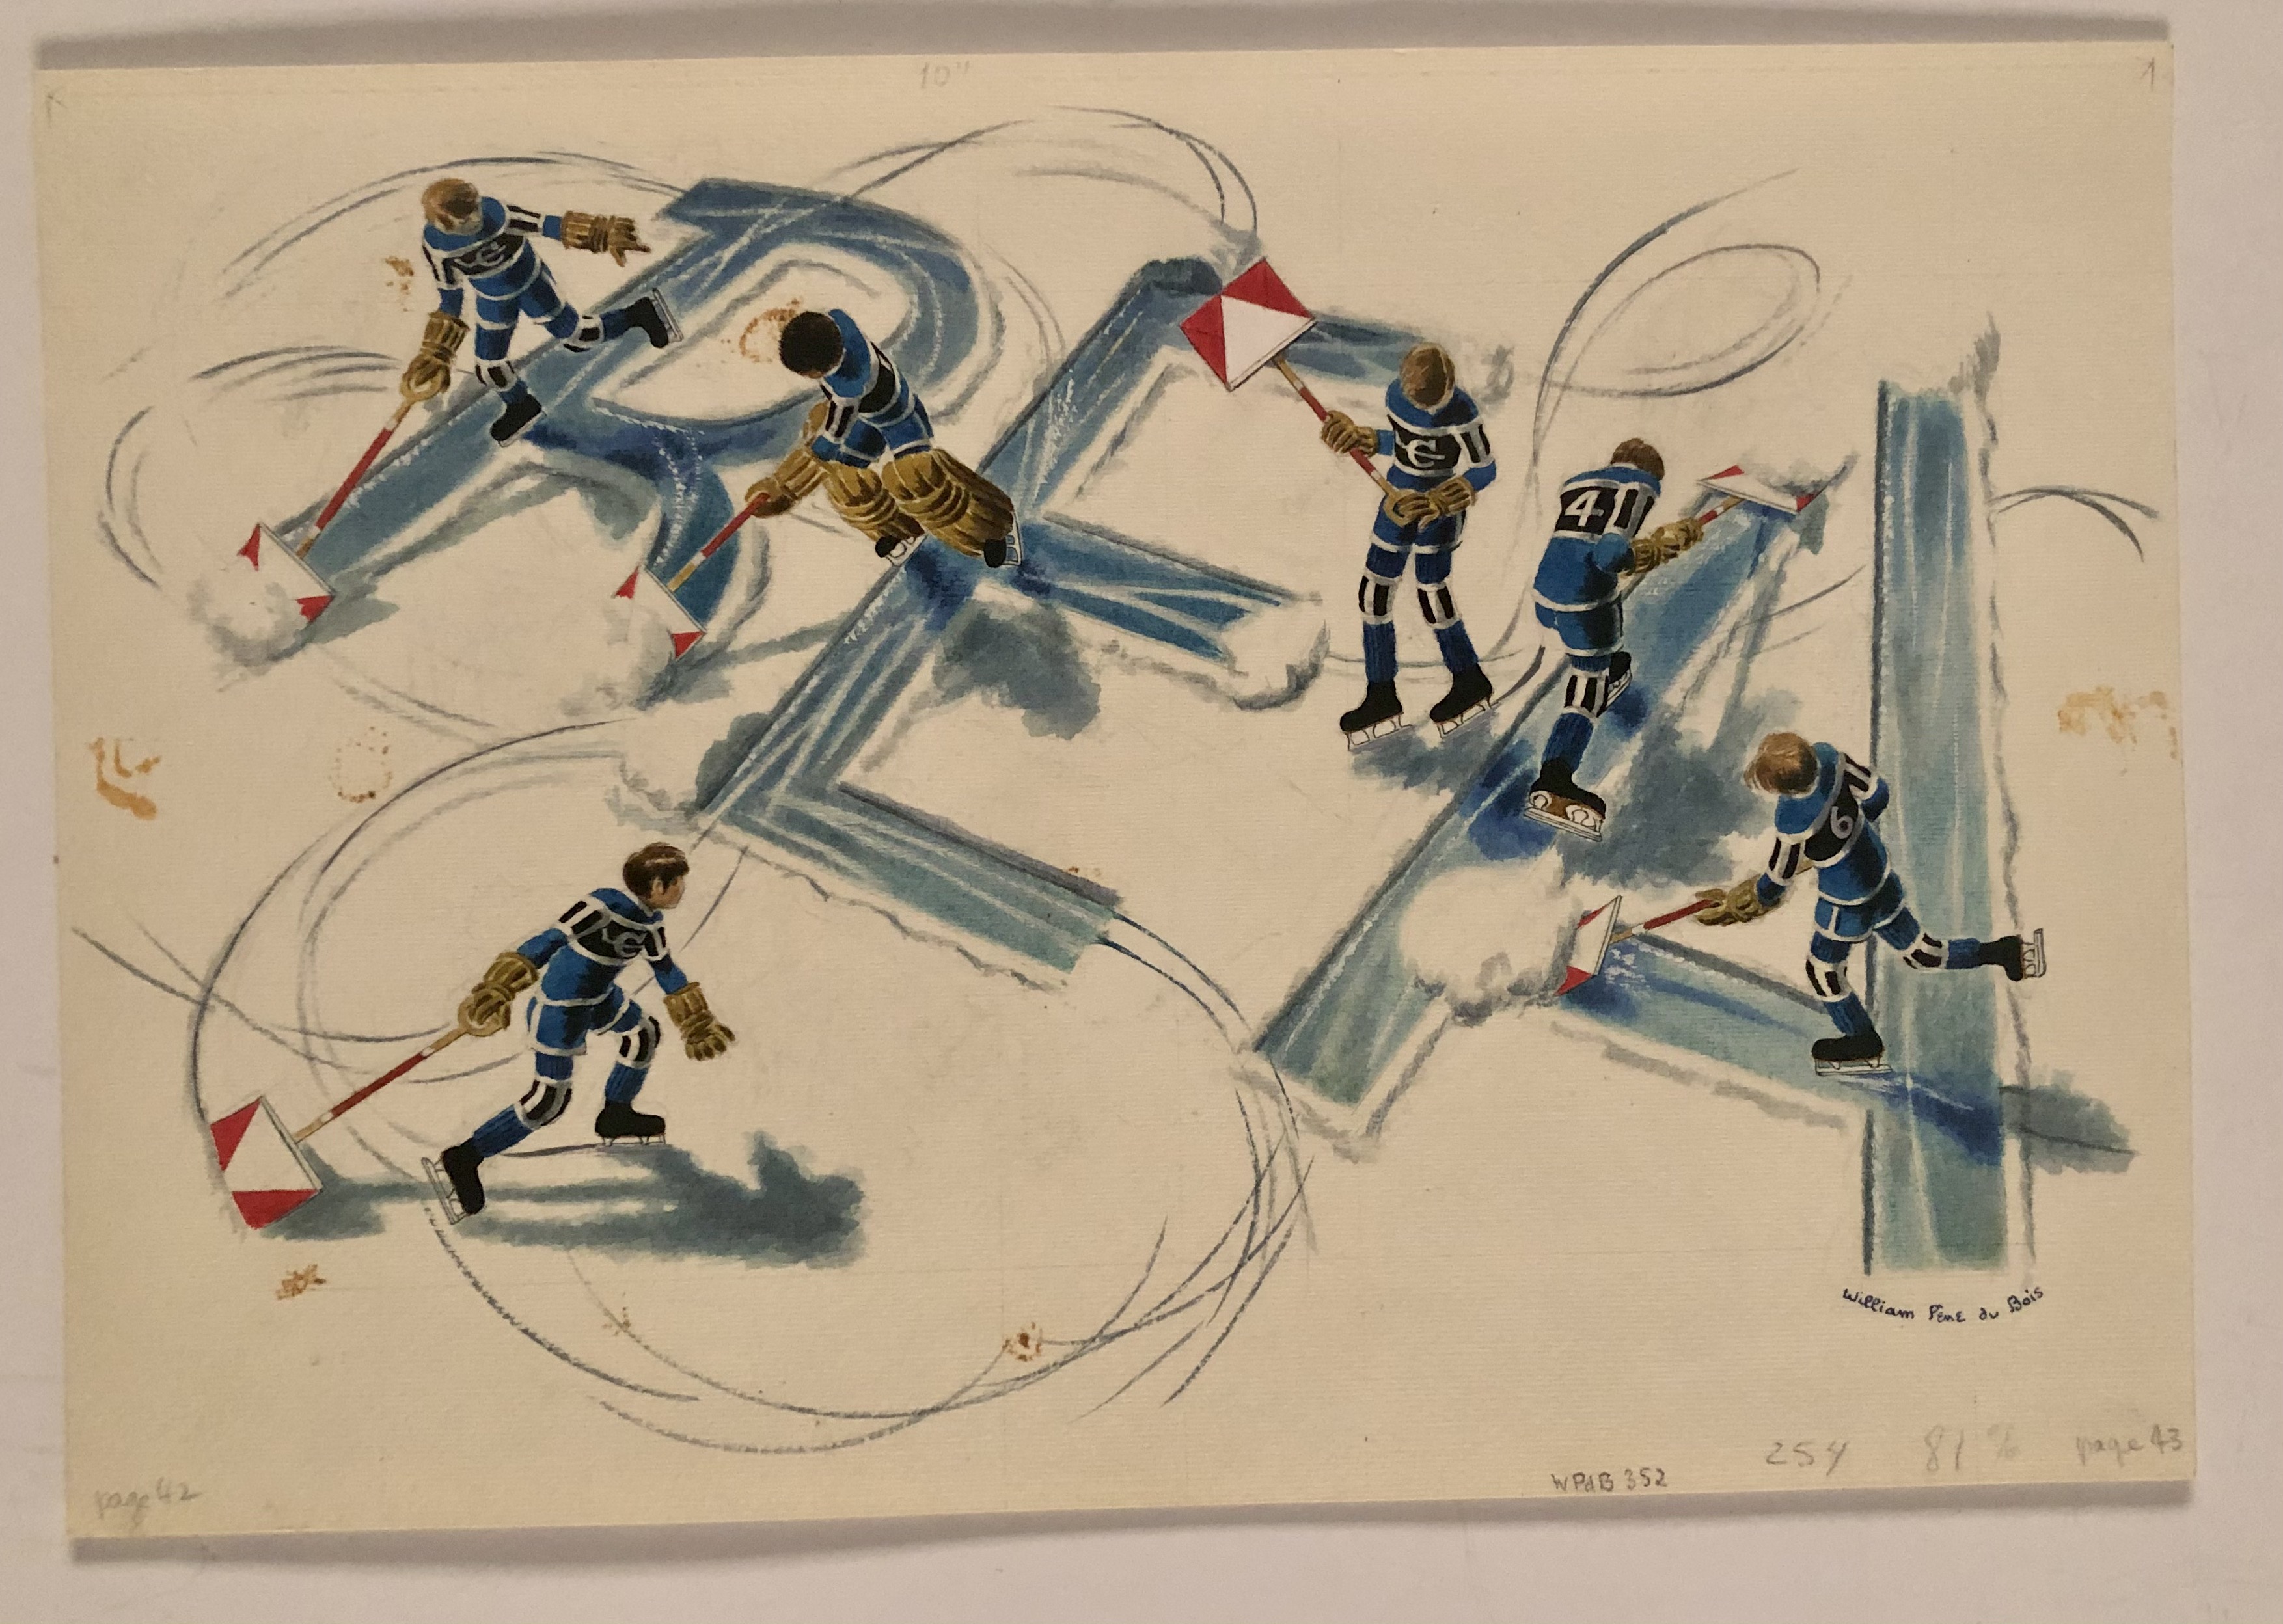 hockey team shoveling "BEA" into ice